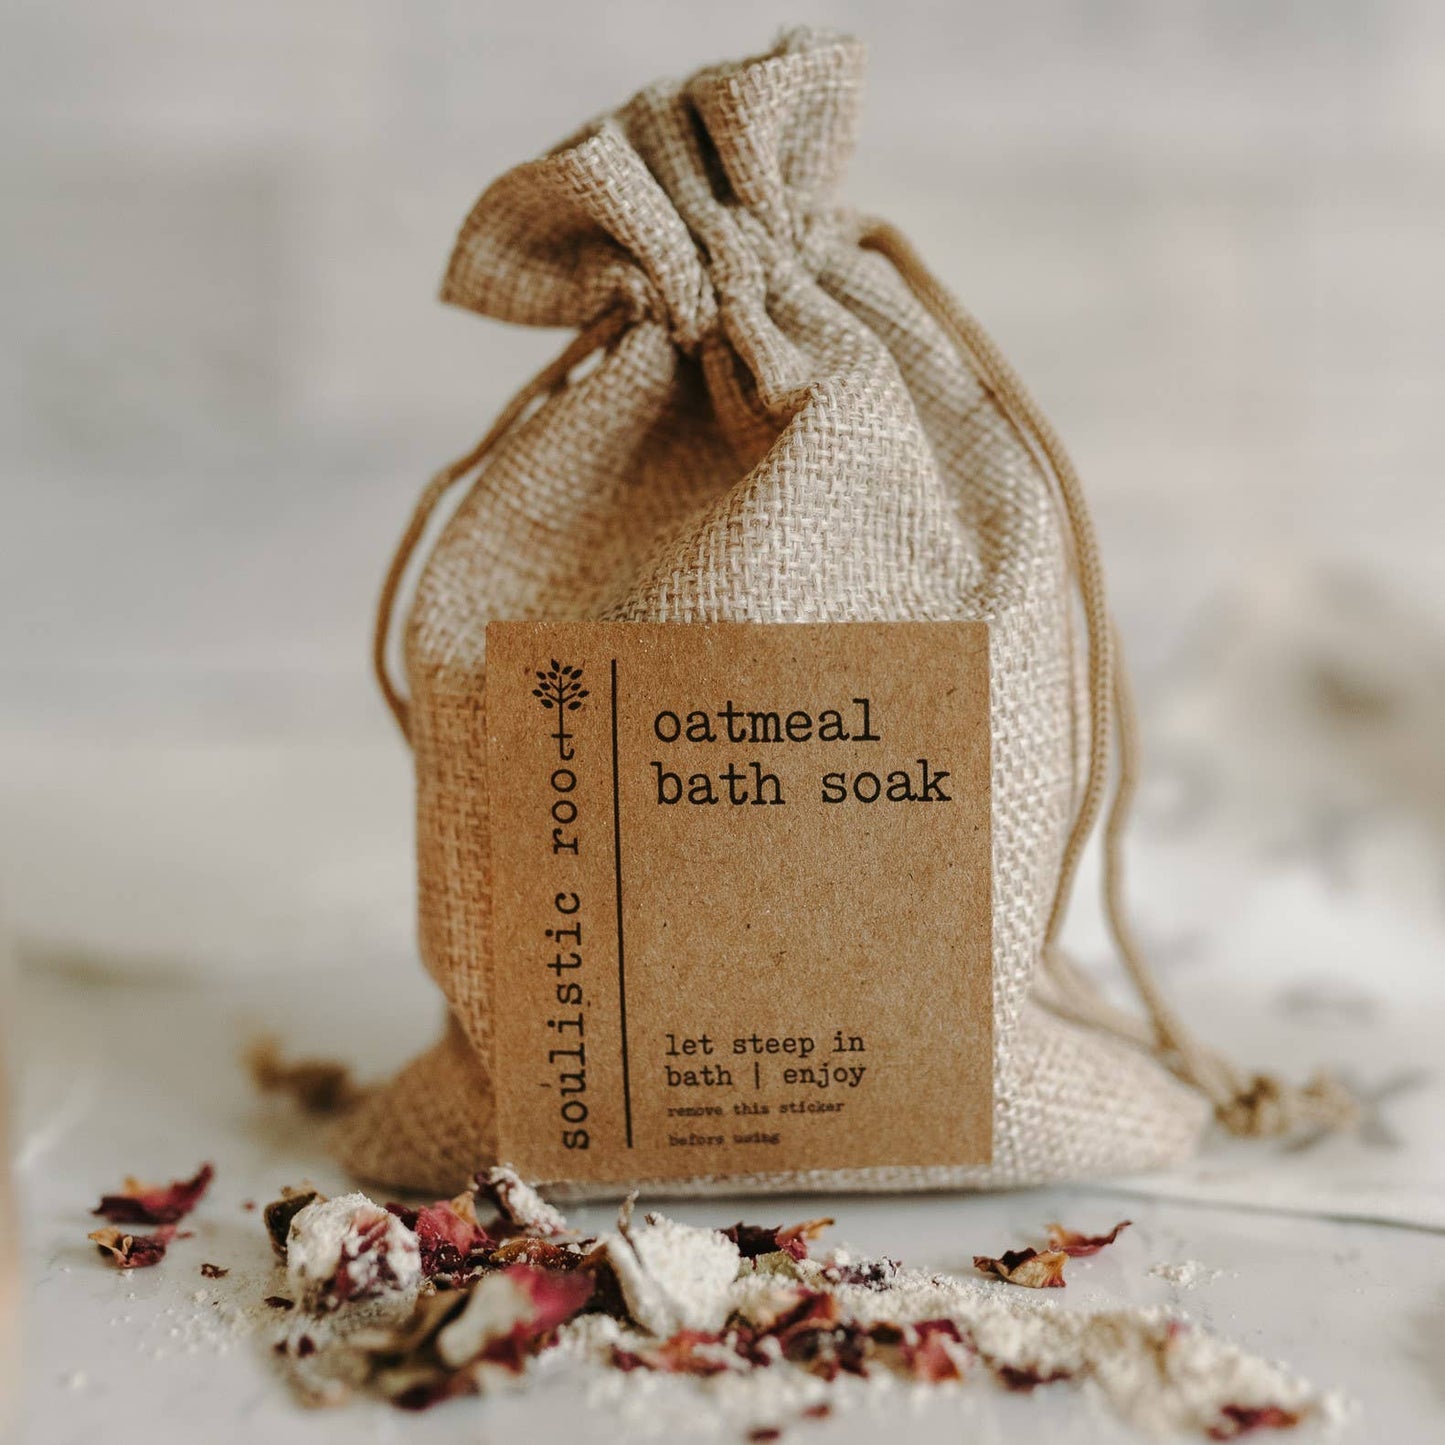 Essential Oils & Self Care Gifts - Rose Petal Herbal Oatmeal Bath Soak | Bath Tea: Rose